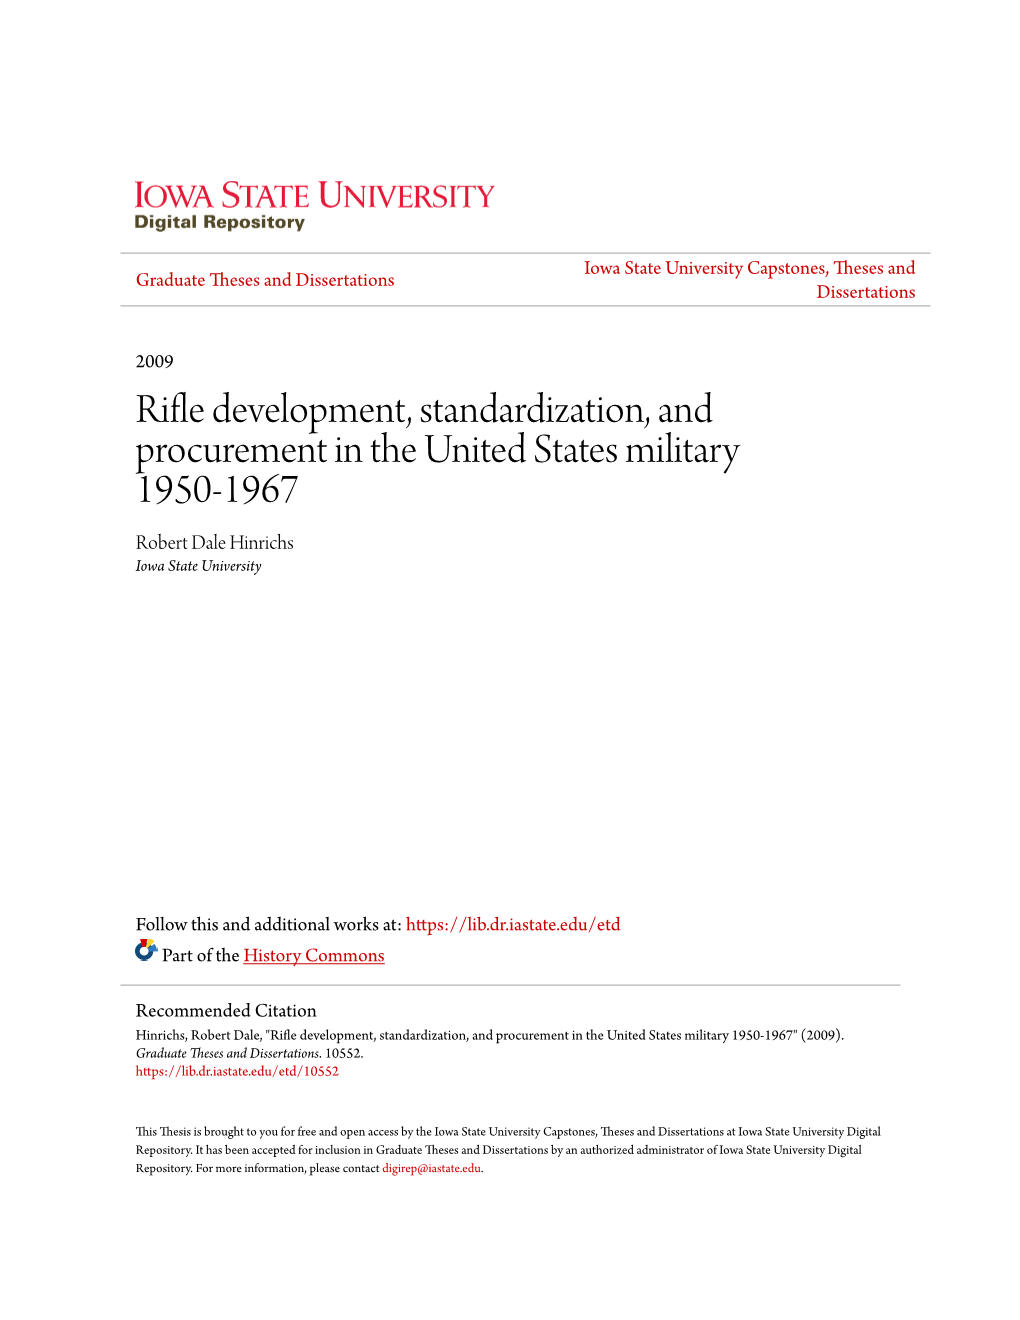 Rifle Development, Standardization, and Procurement in the United States Military 1950-1967 Robert Dale Hinrichs Iowa State University